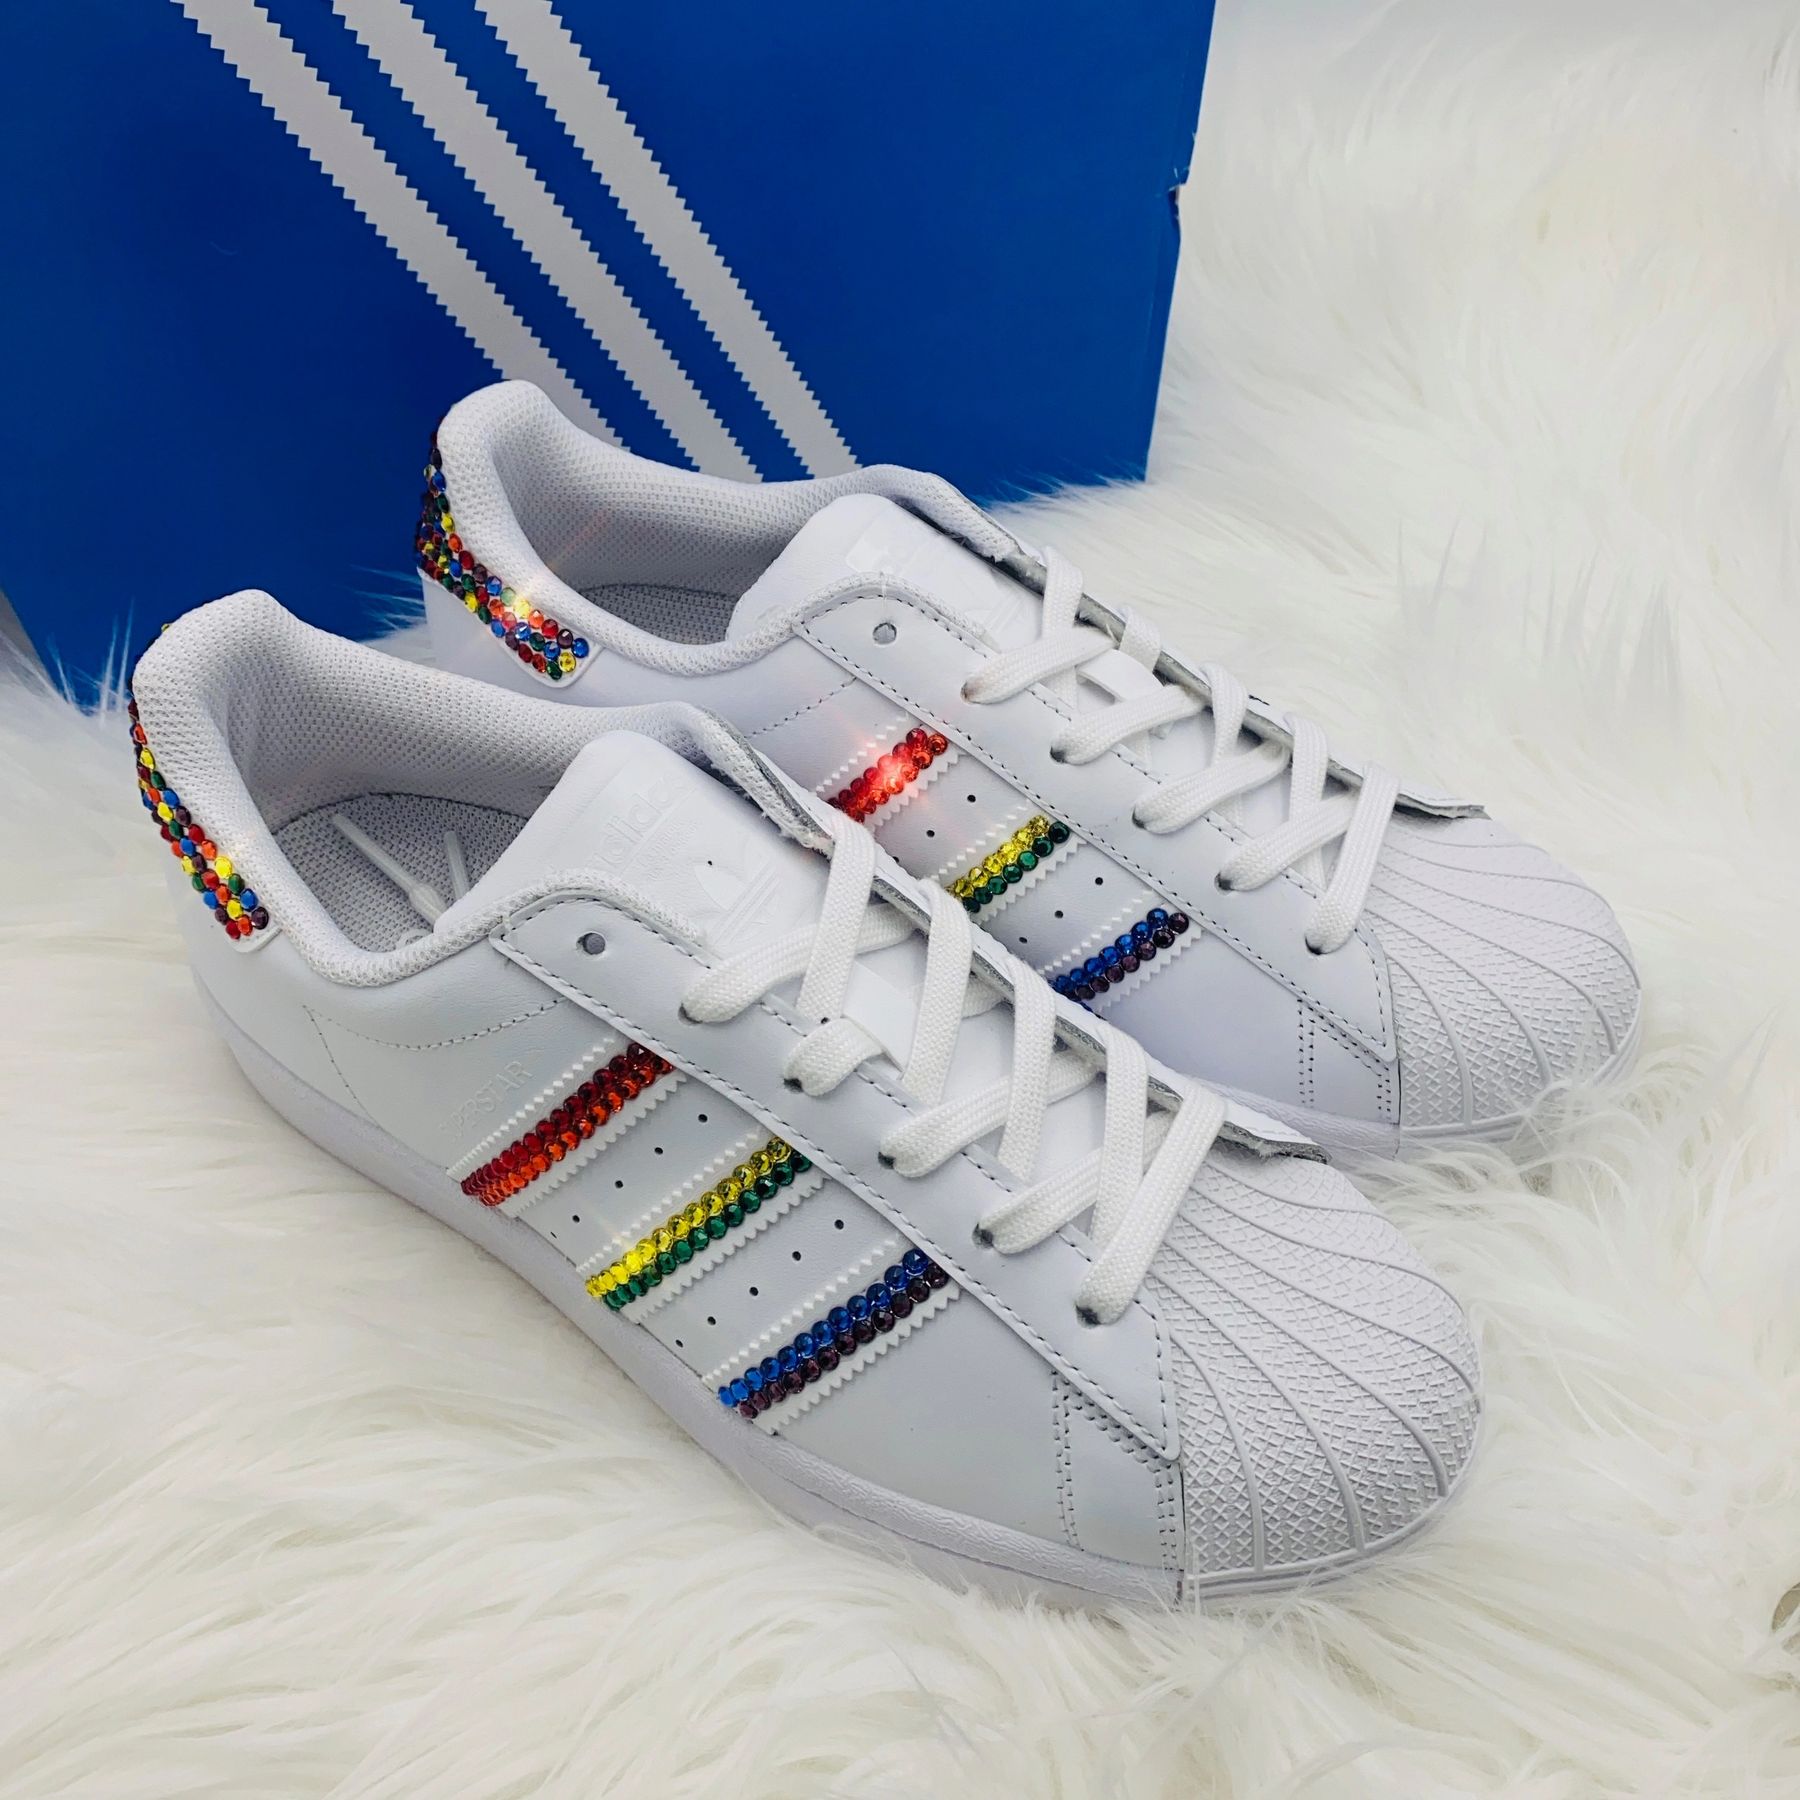 Swarovski Bling Adidas Superstar Shoes - All White - Rainbow Stripes